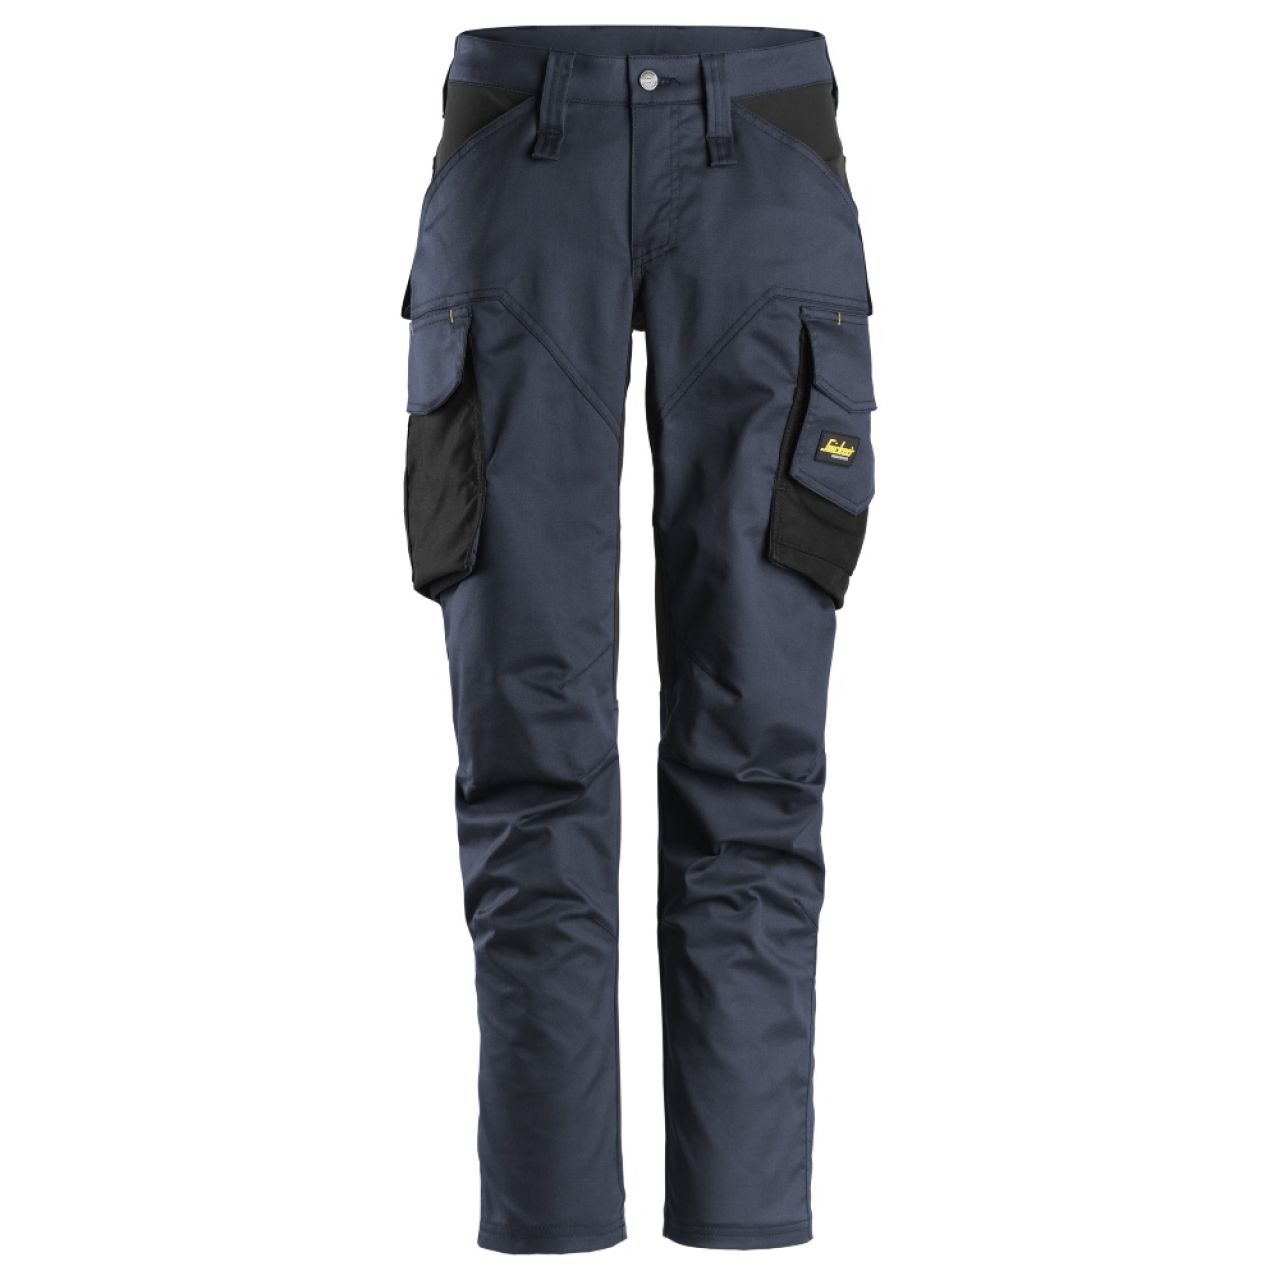 6703 Pantalones largos de trabajo elásticos para mujer con bolsillos para rodilleras AllroundWork azul marino-negro talla 36